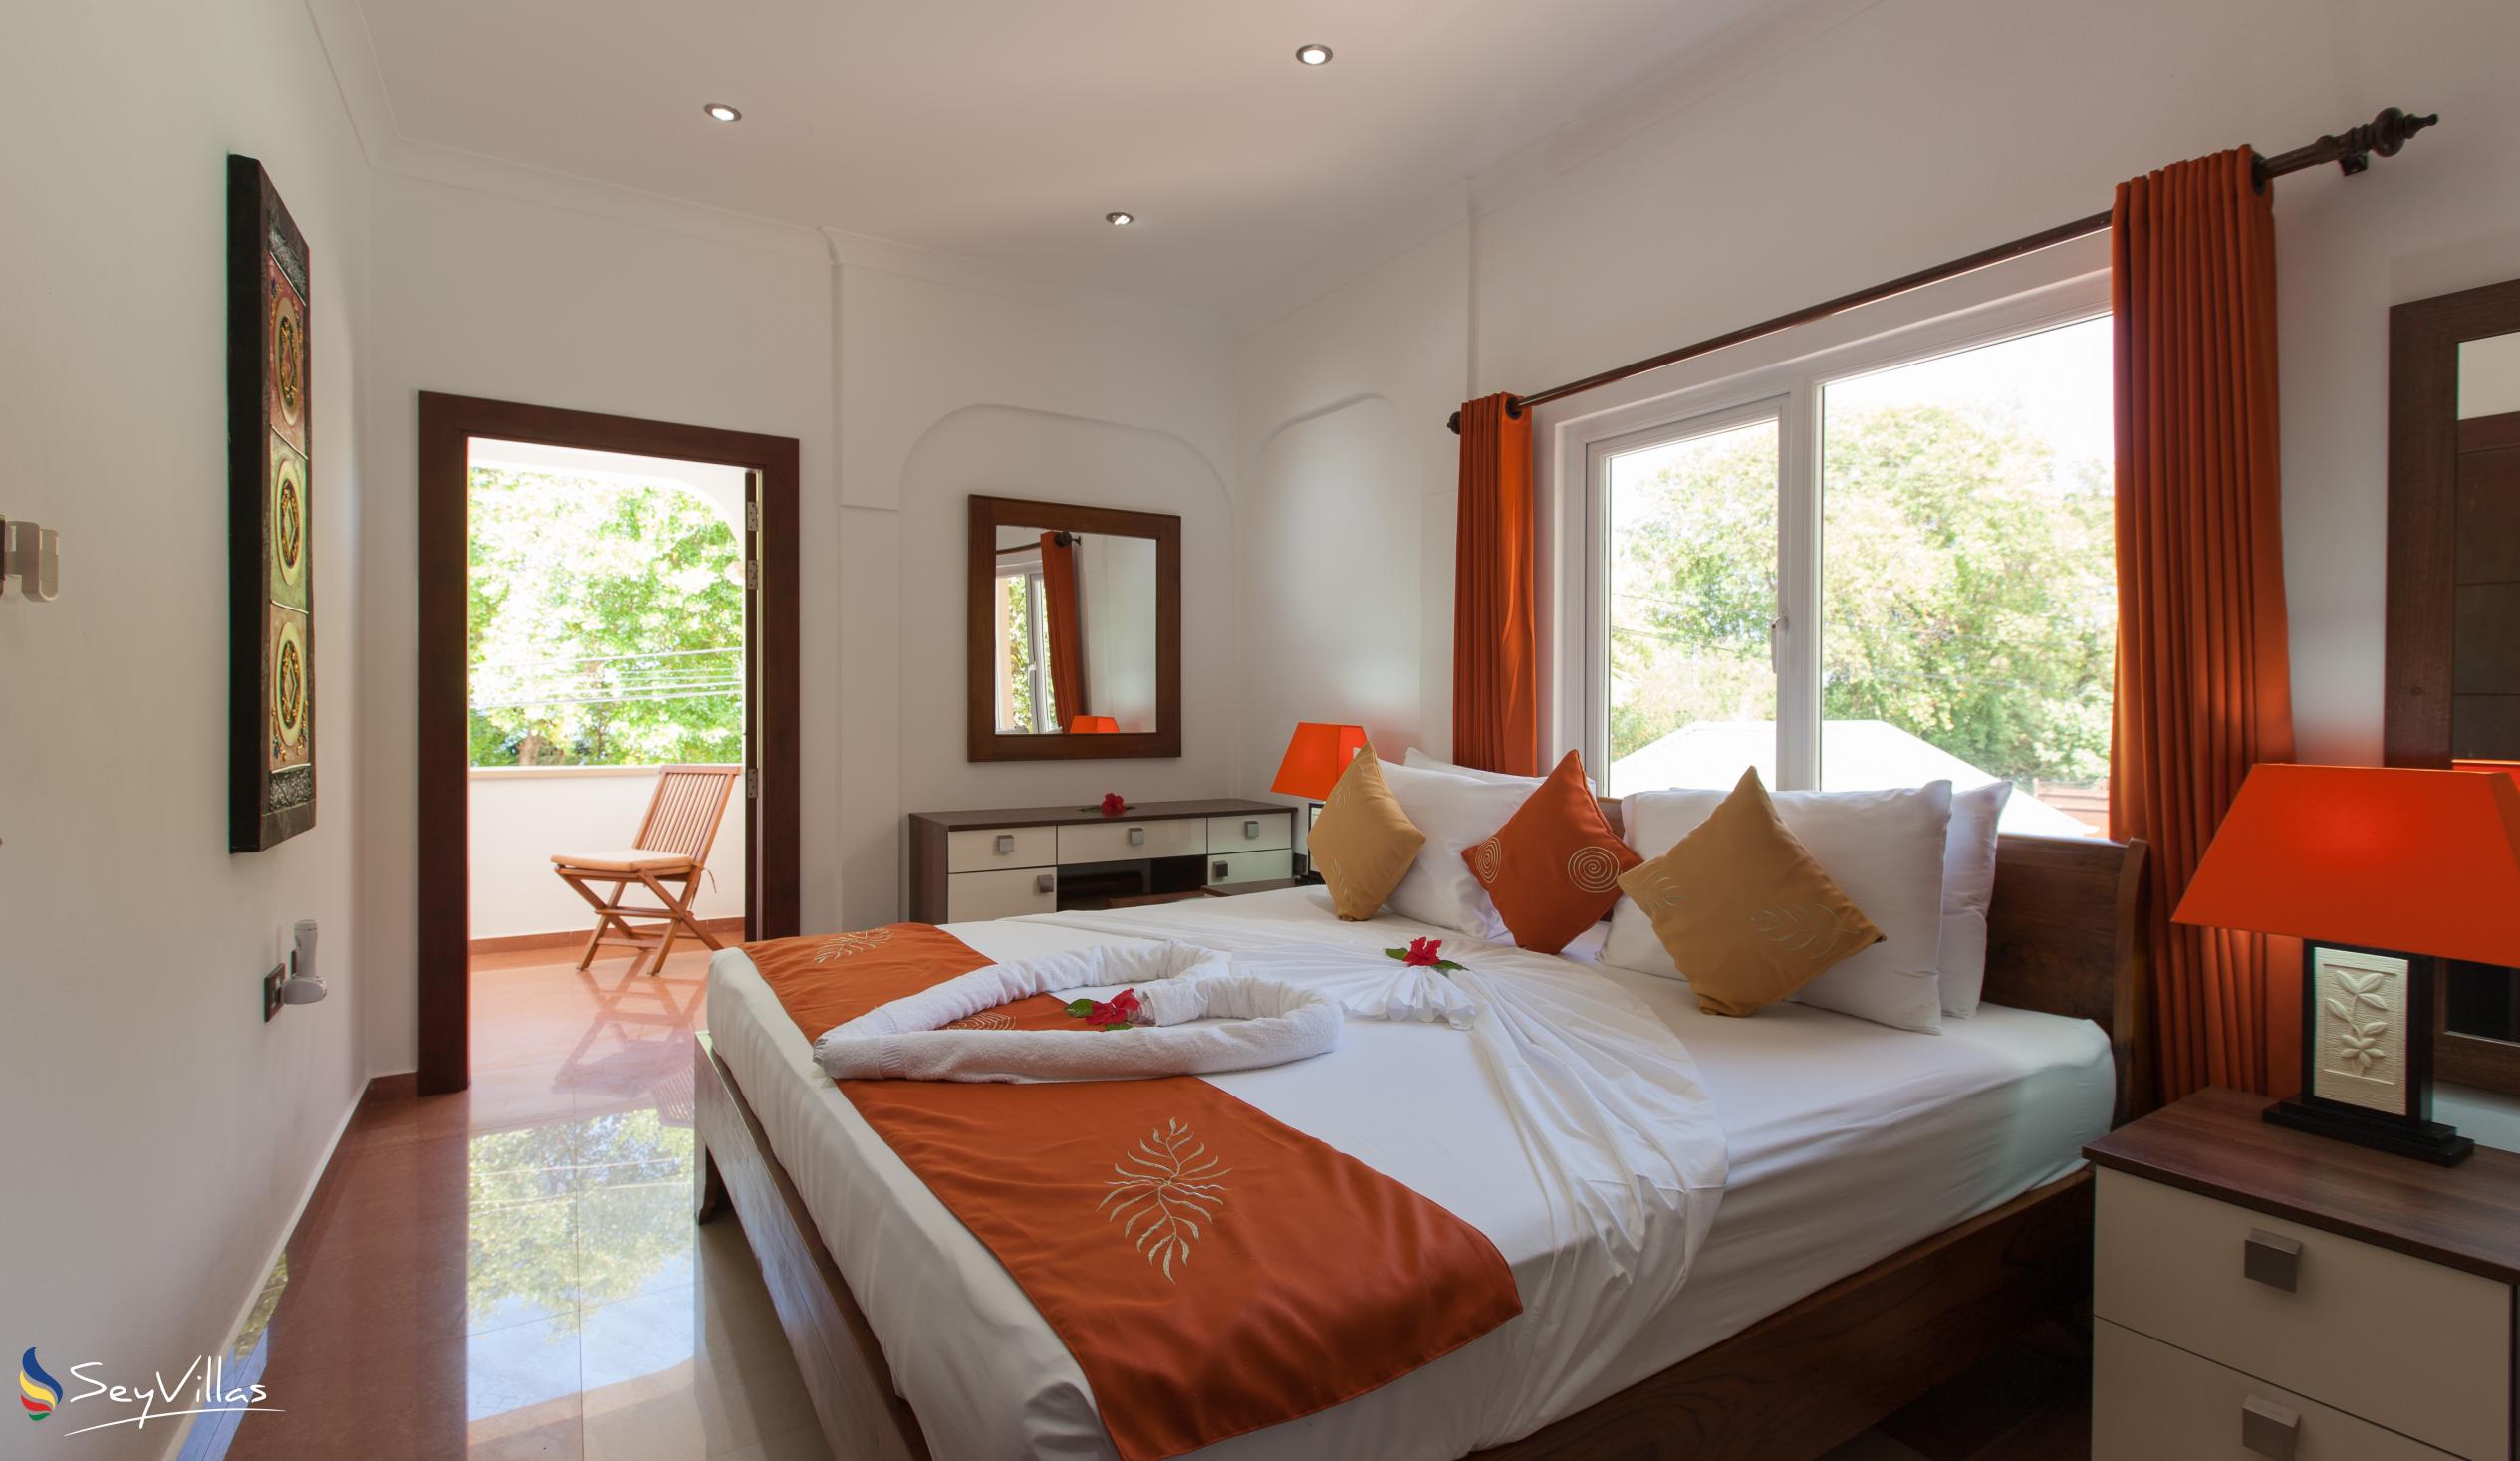 Photo 109: YASAD Luxury Beach Residence - 3-Bedroom Apartment First Floor - Praslin (Seychelles)